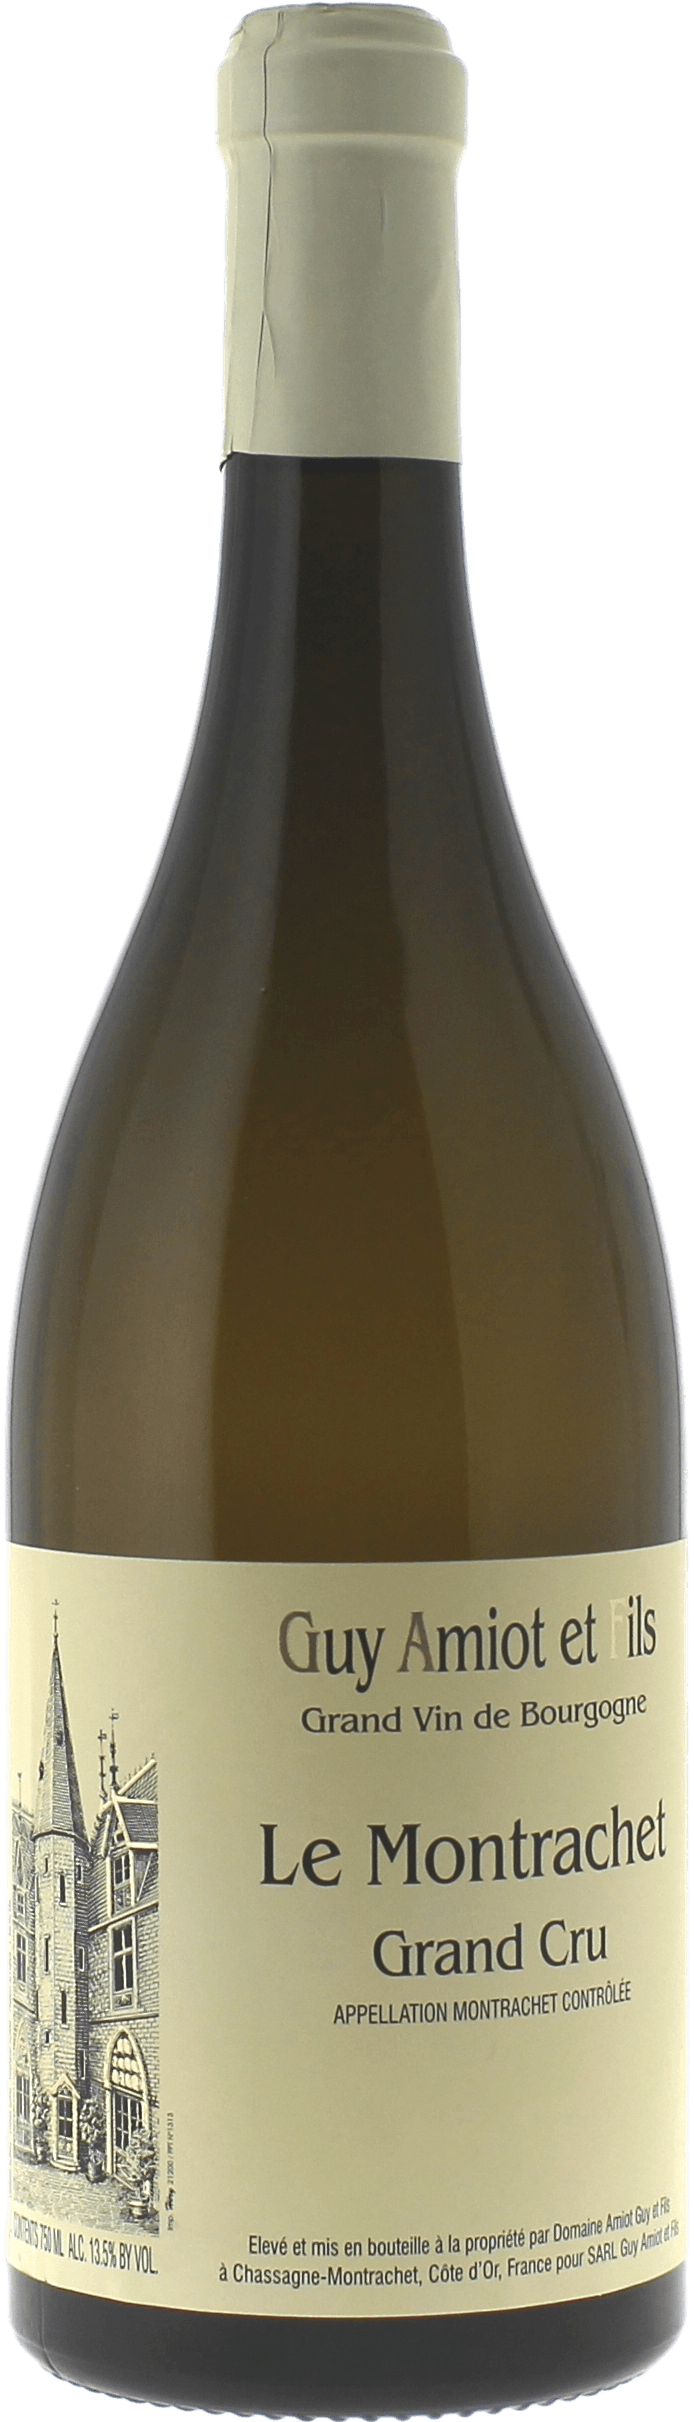 Montrachet grand cru 2015 Domaine AMIOT, Bourgogne blanc